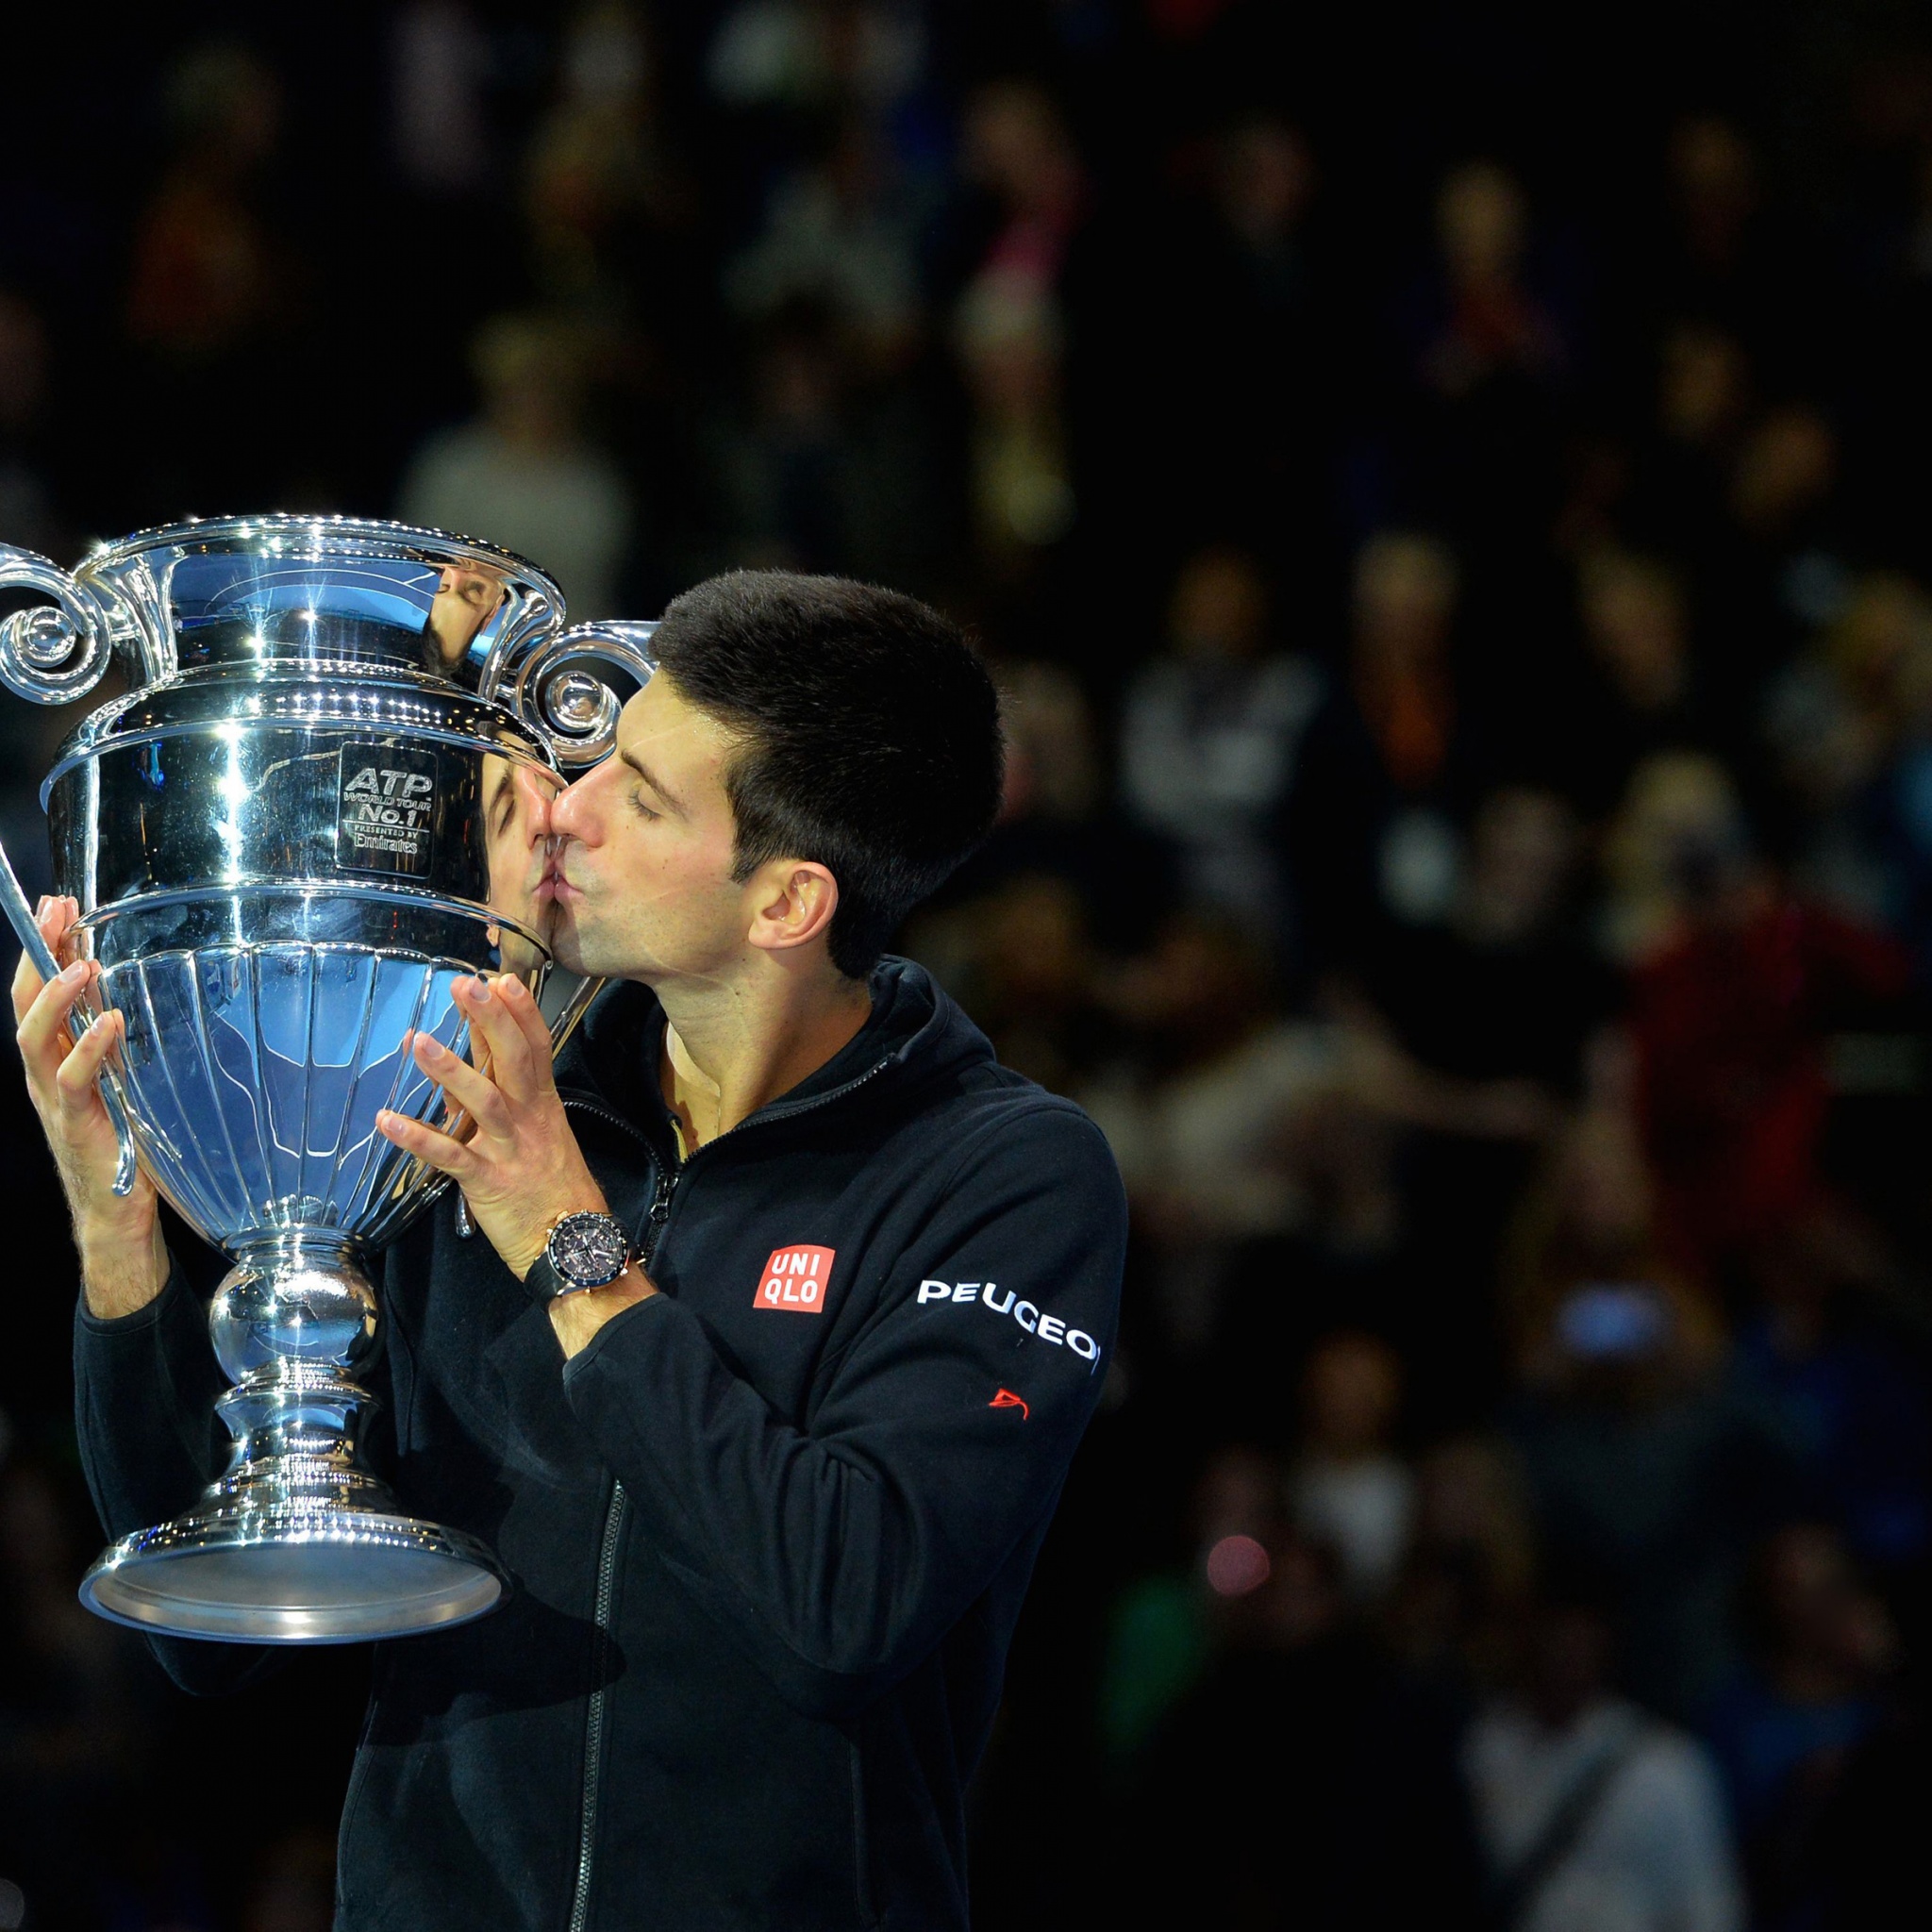 Djokovic ATP World Tour Finals 2015